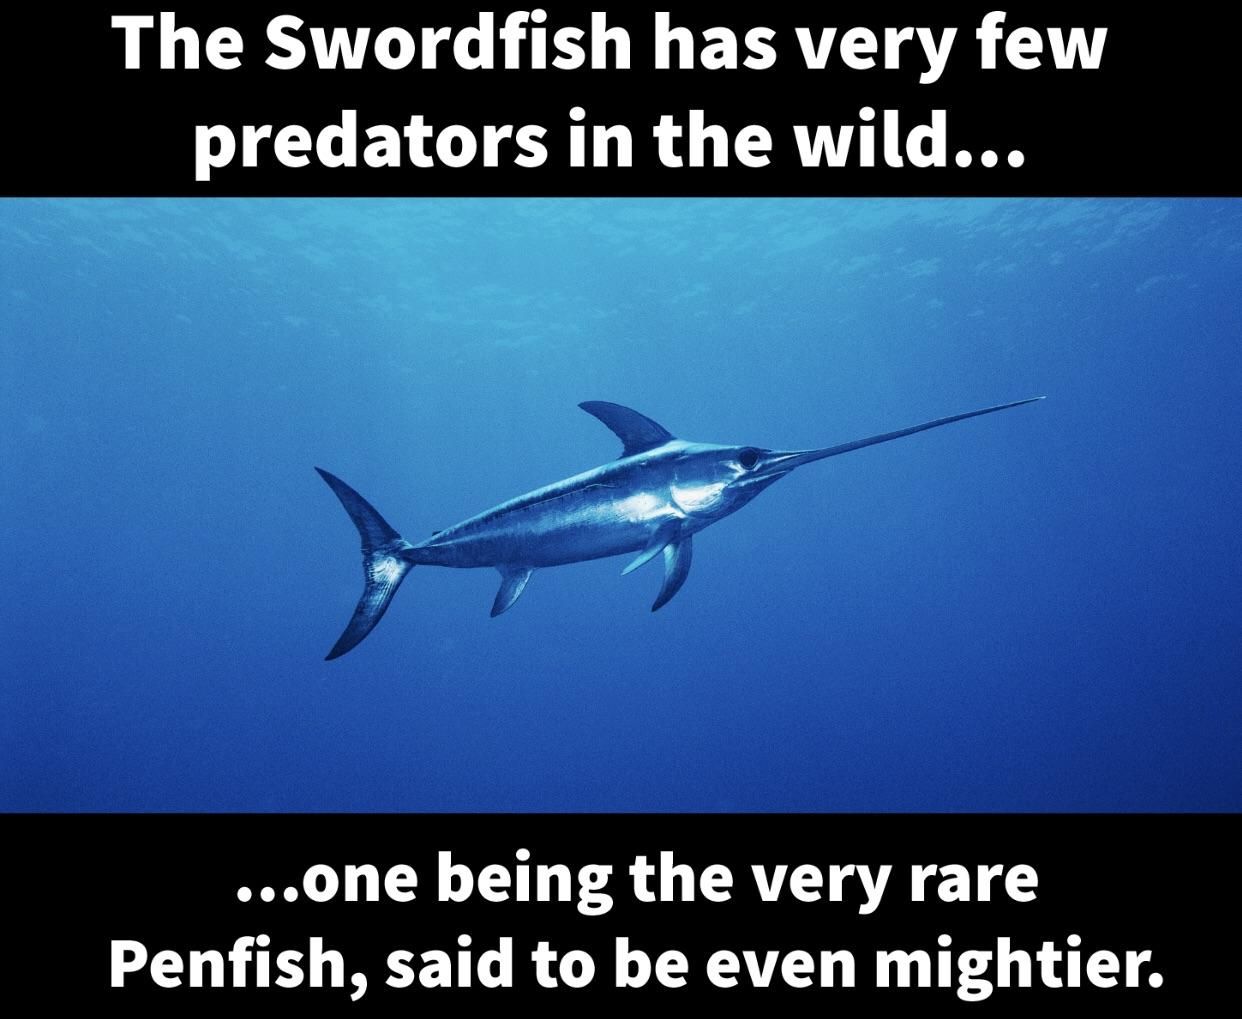 The elusive Penfish